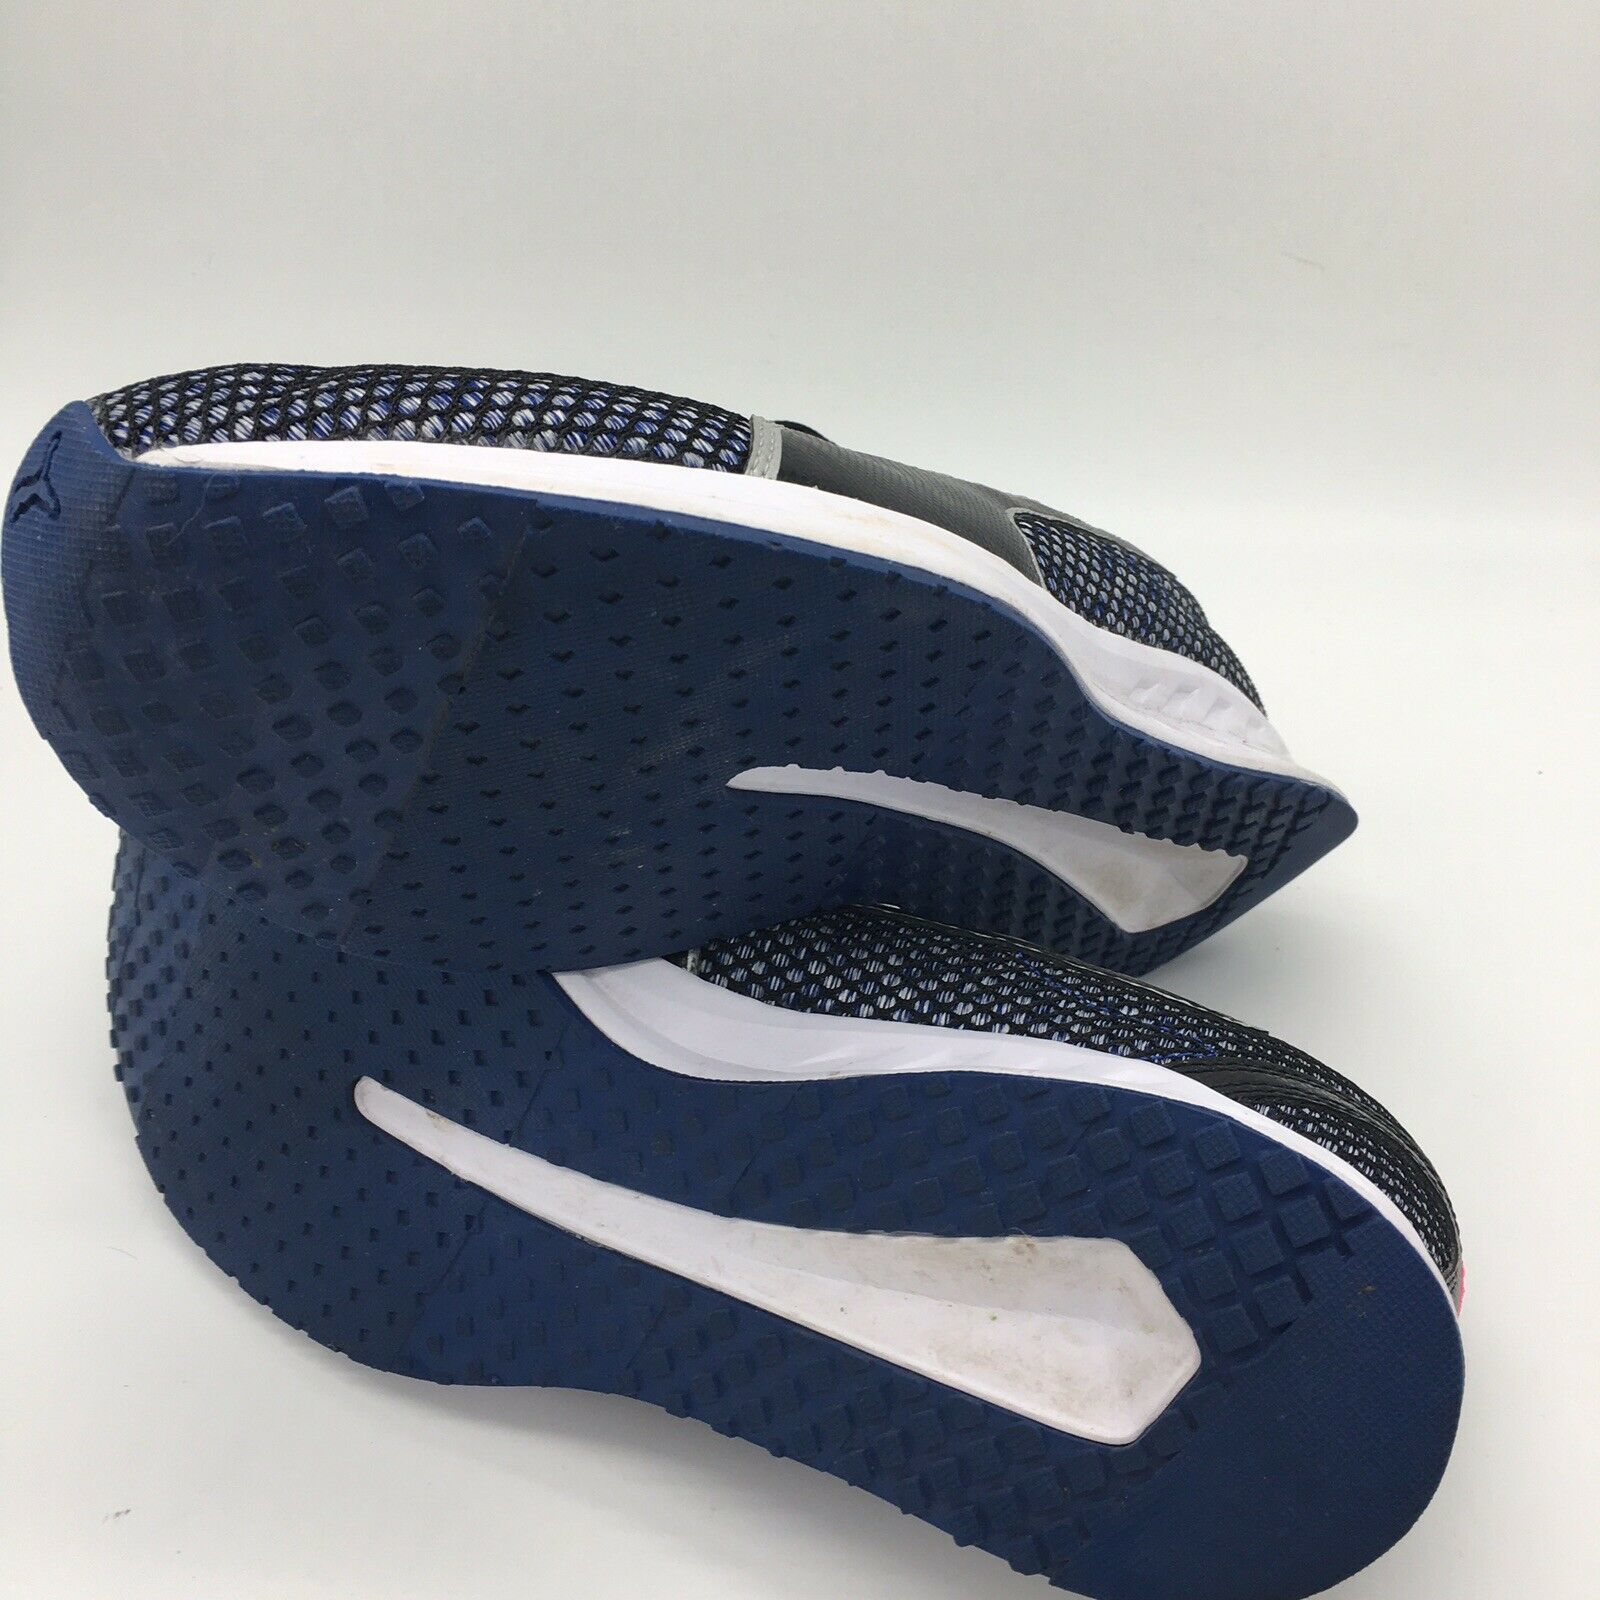 Puma Soft Foam Comfort Shoes Blue, Size 8.5 and 50 similar items